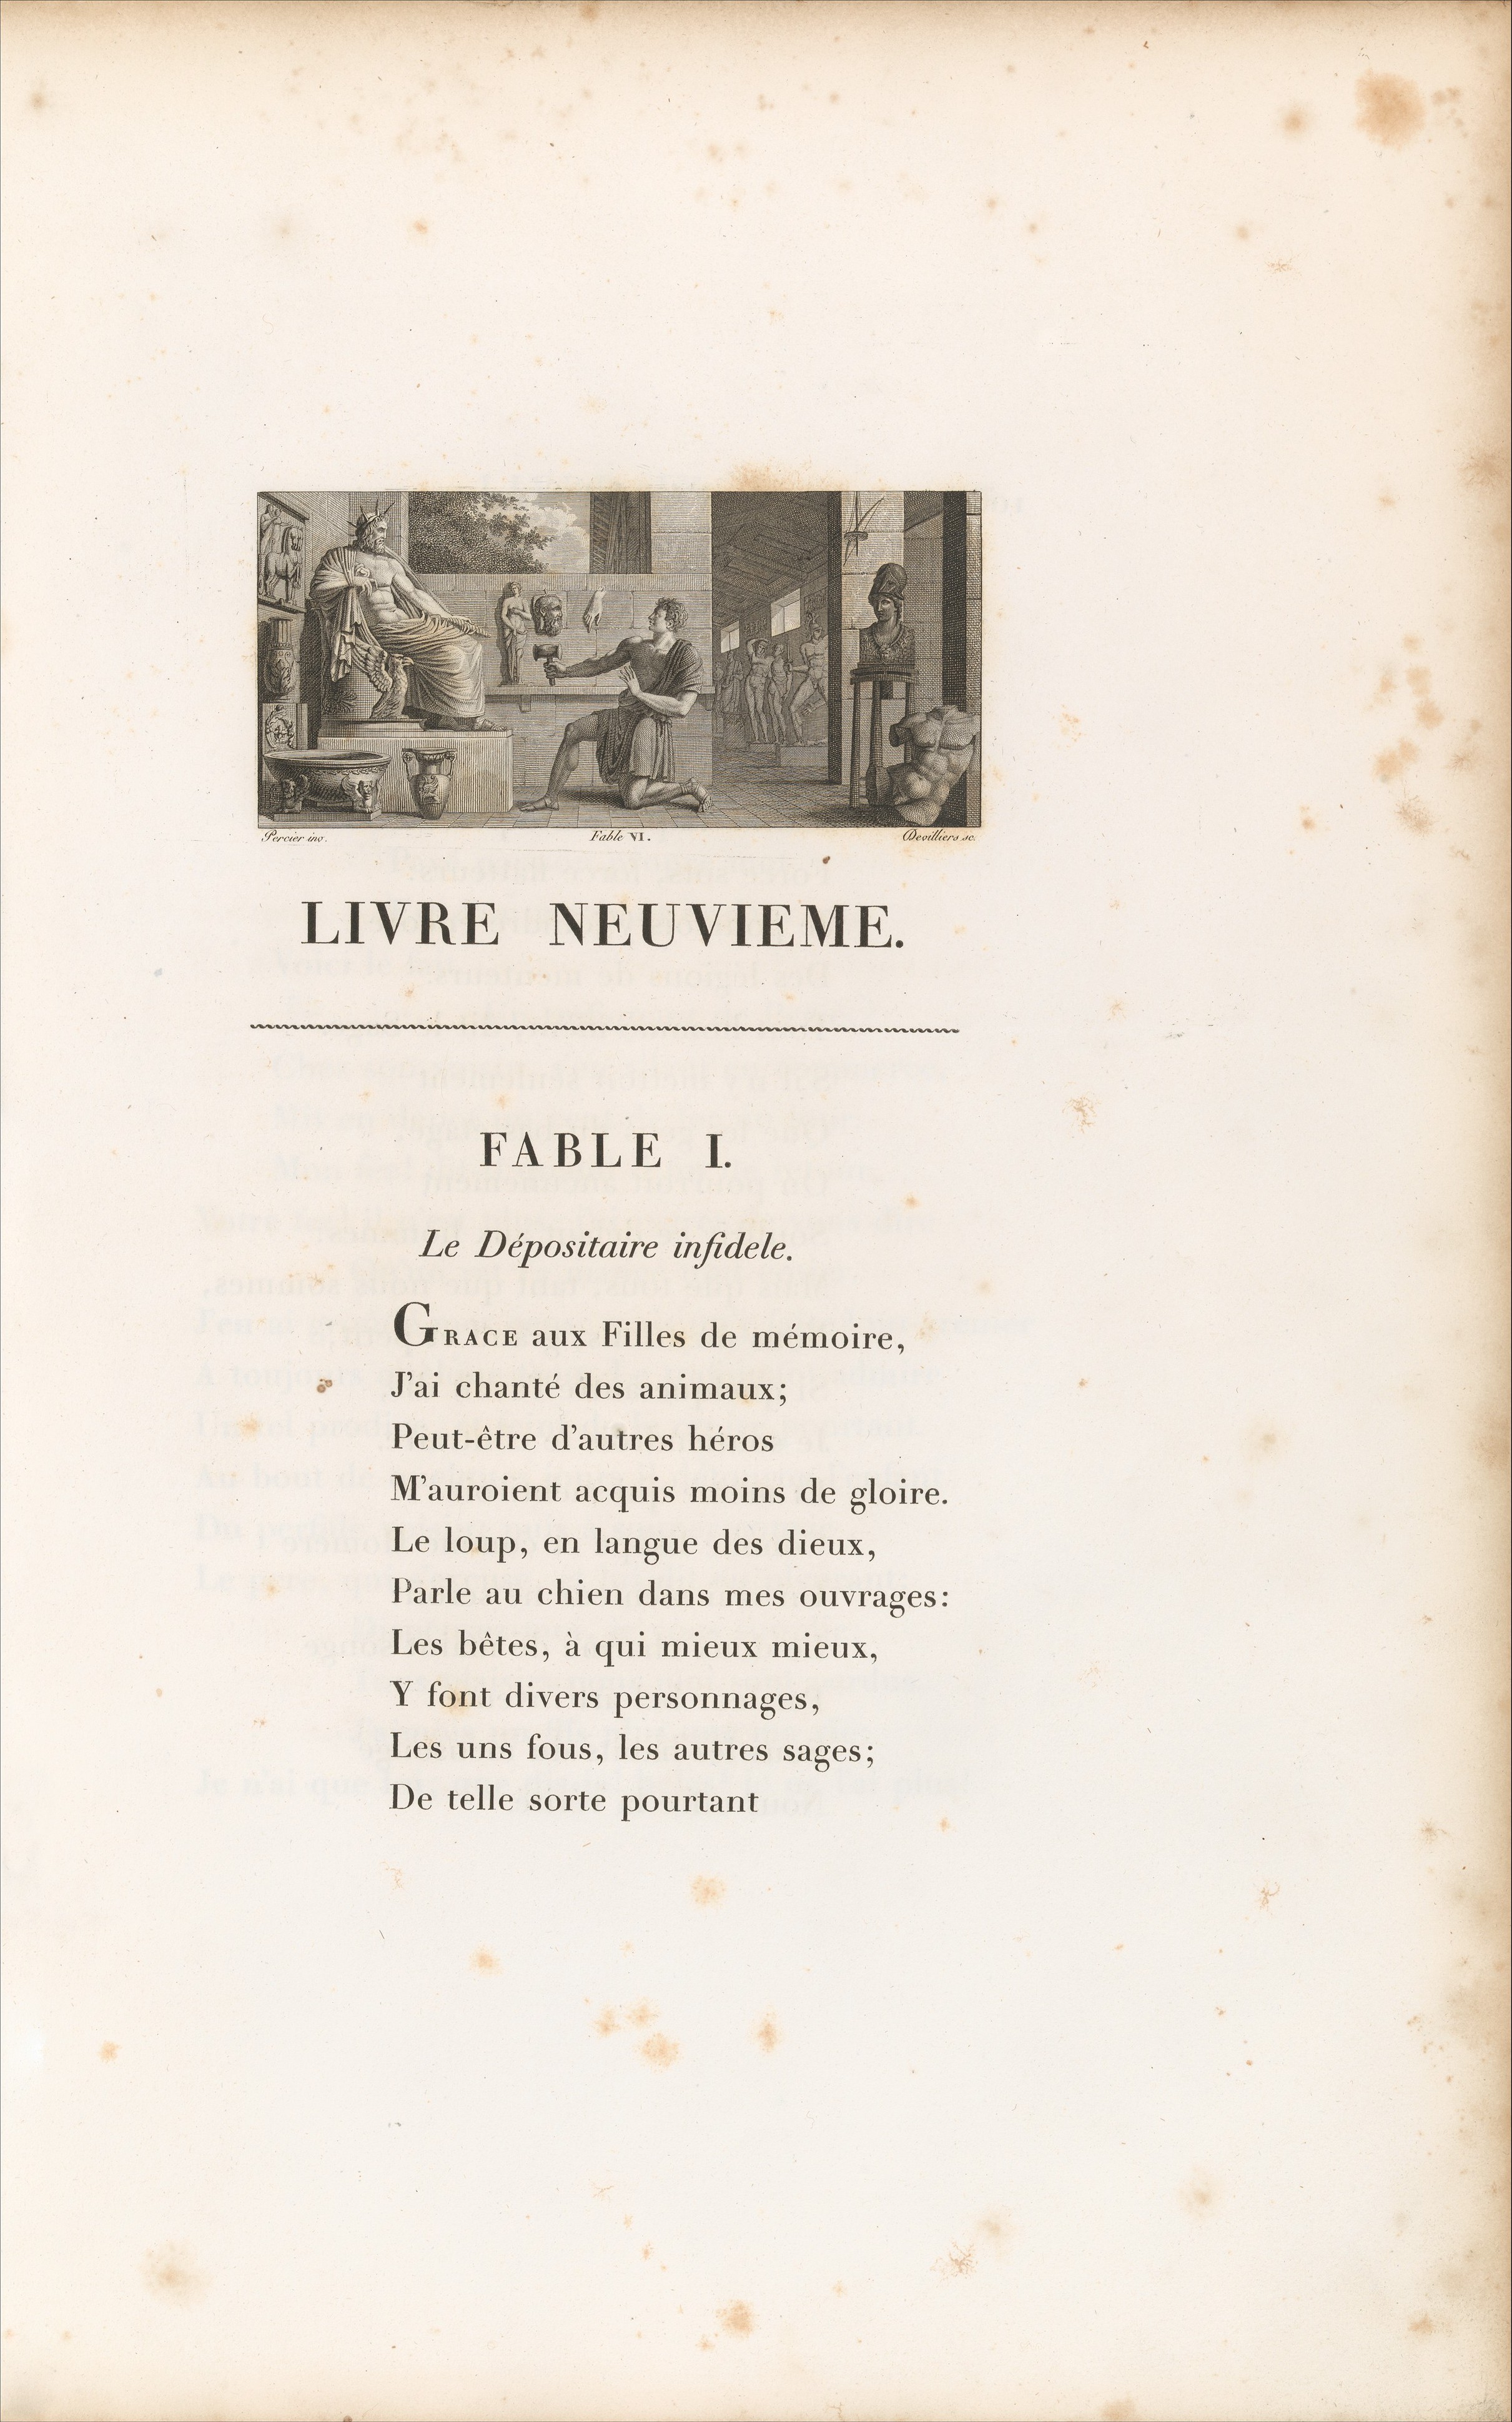 Written by Jean de La Fontaine | Fables | The Metropolitan Museum of Art